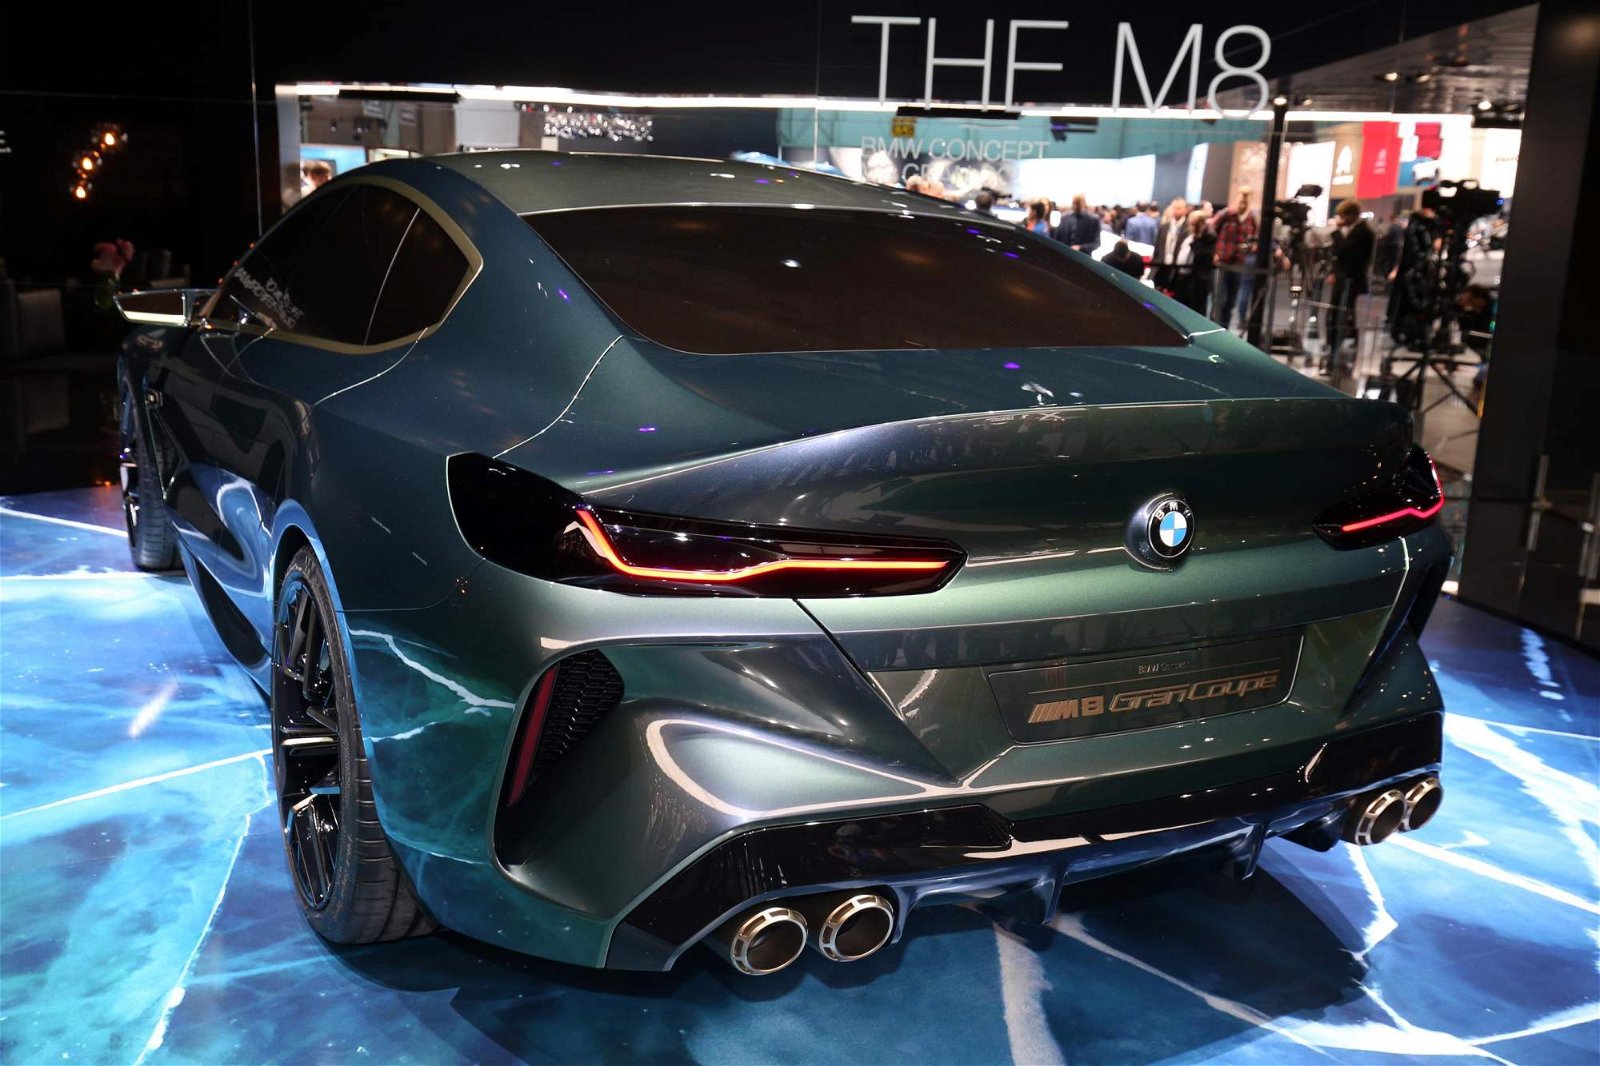 BMW-Concept-M8-Gran-Coupe-at-2018-Geneva-Motor-Show-11